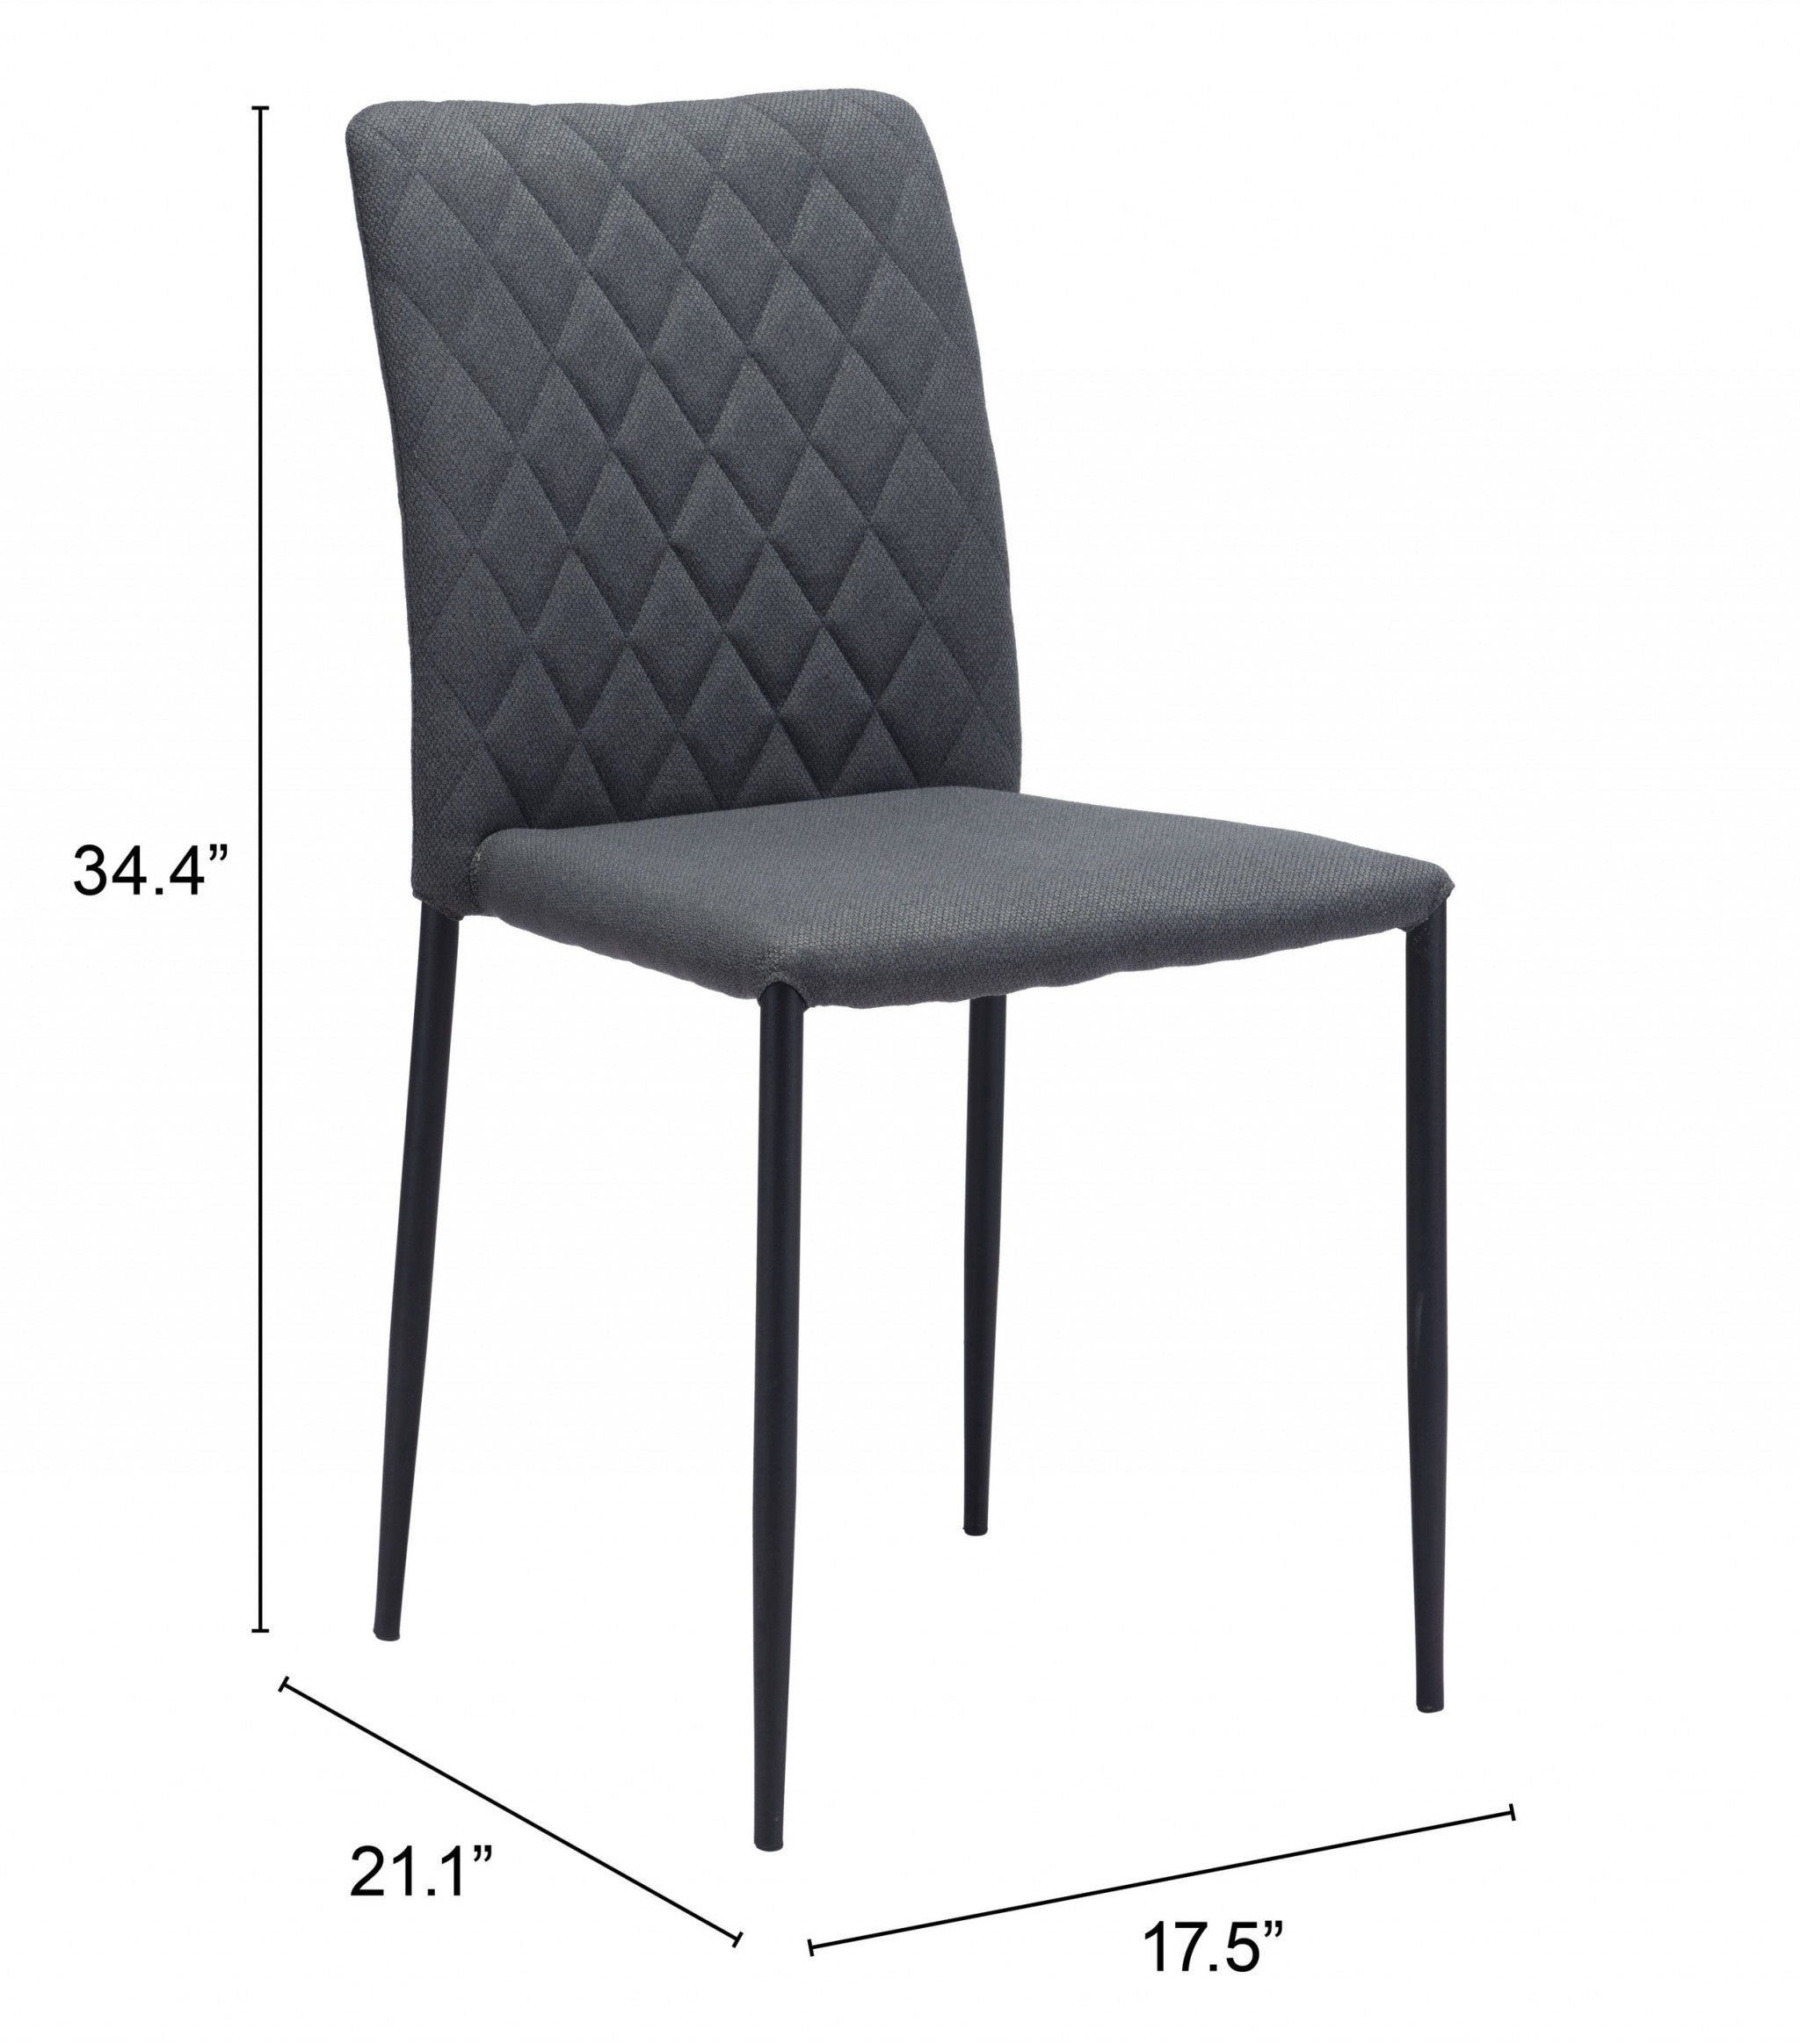 Set of Two Dark Gray Diamond Weave Dining Chairs